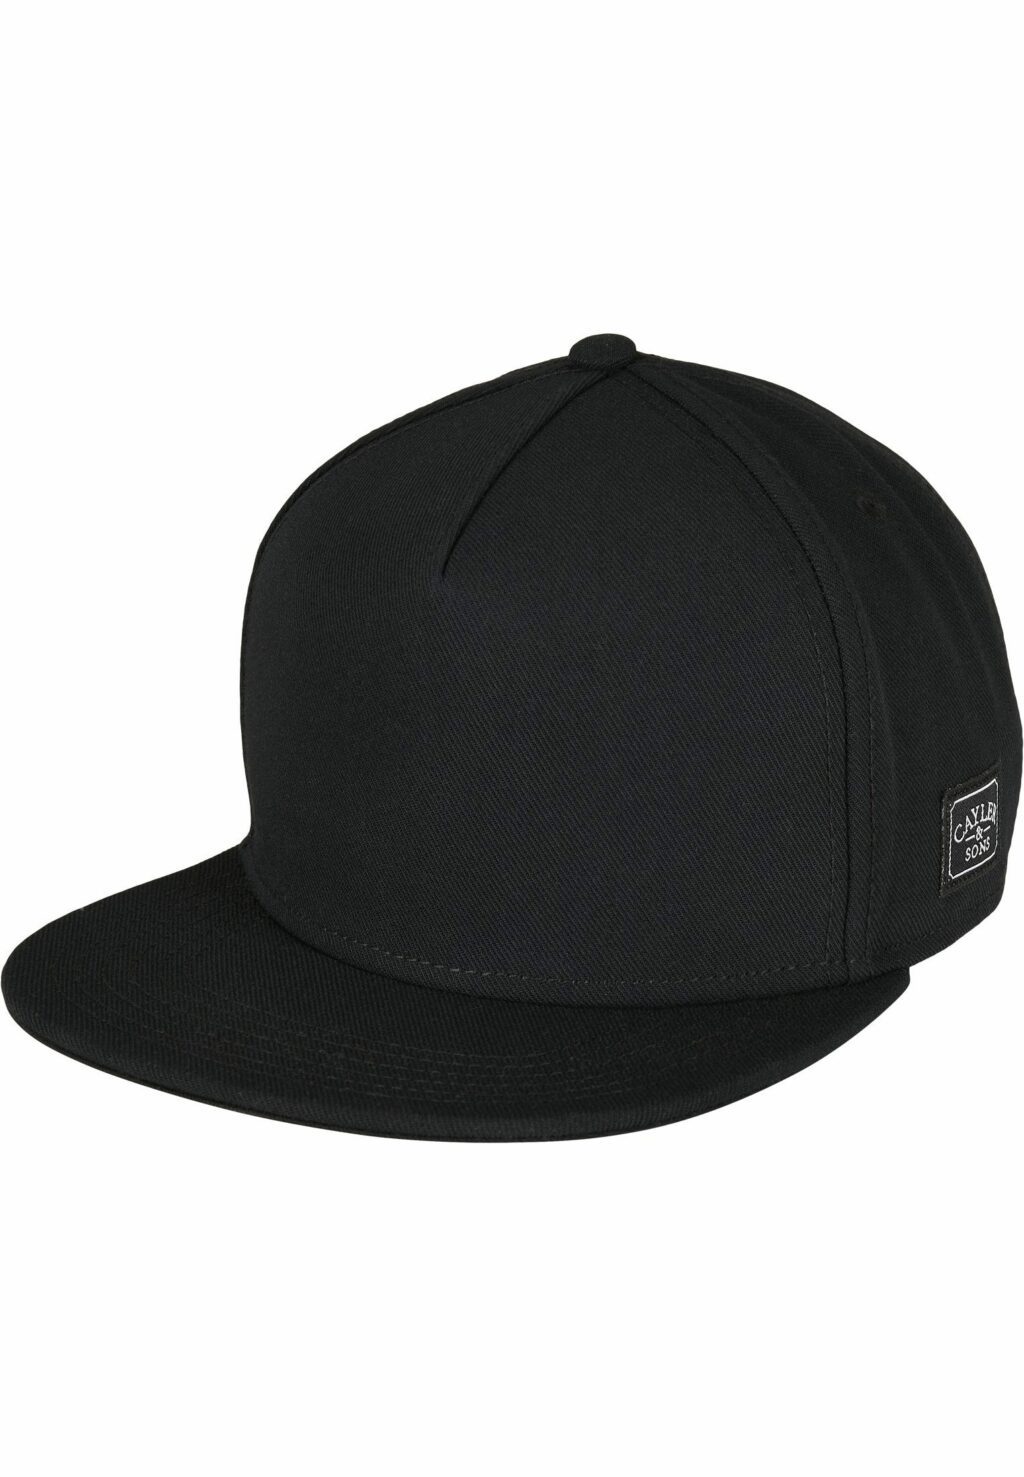 C&S Plain Snapback Cap black one CS005